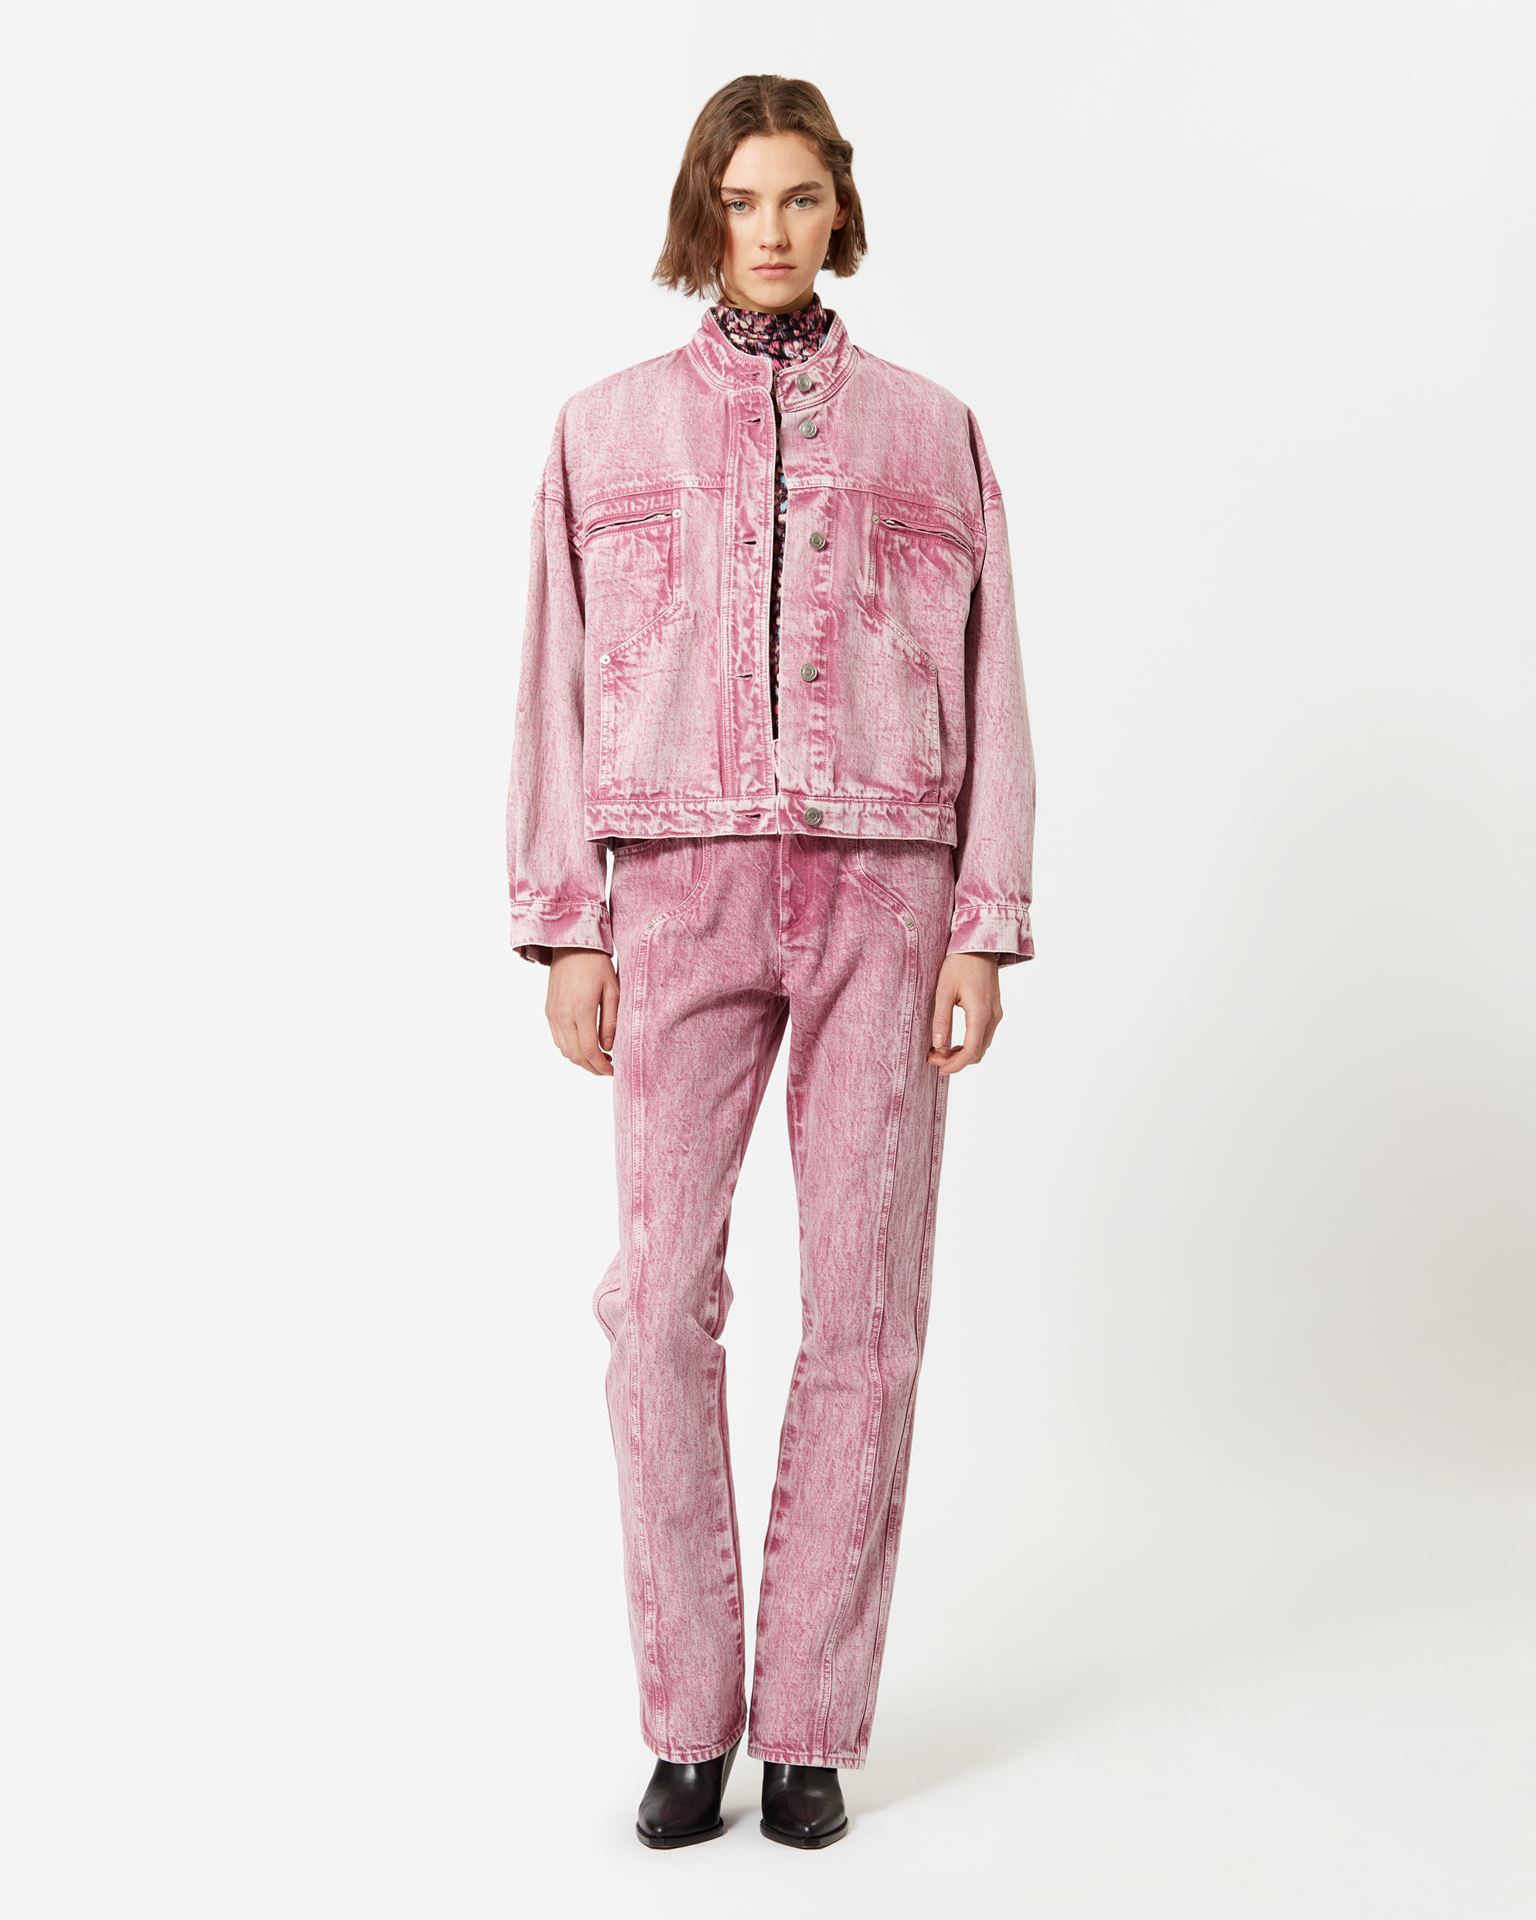 Isabel Marant Marant Étoile, Viane Cotton Jacket - Women - Pink